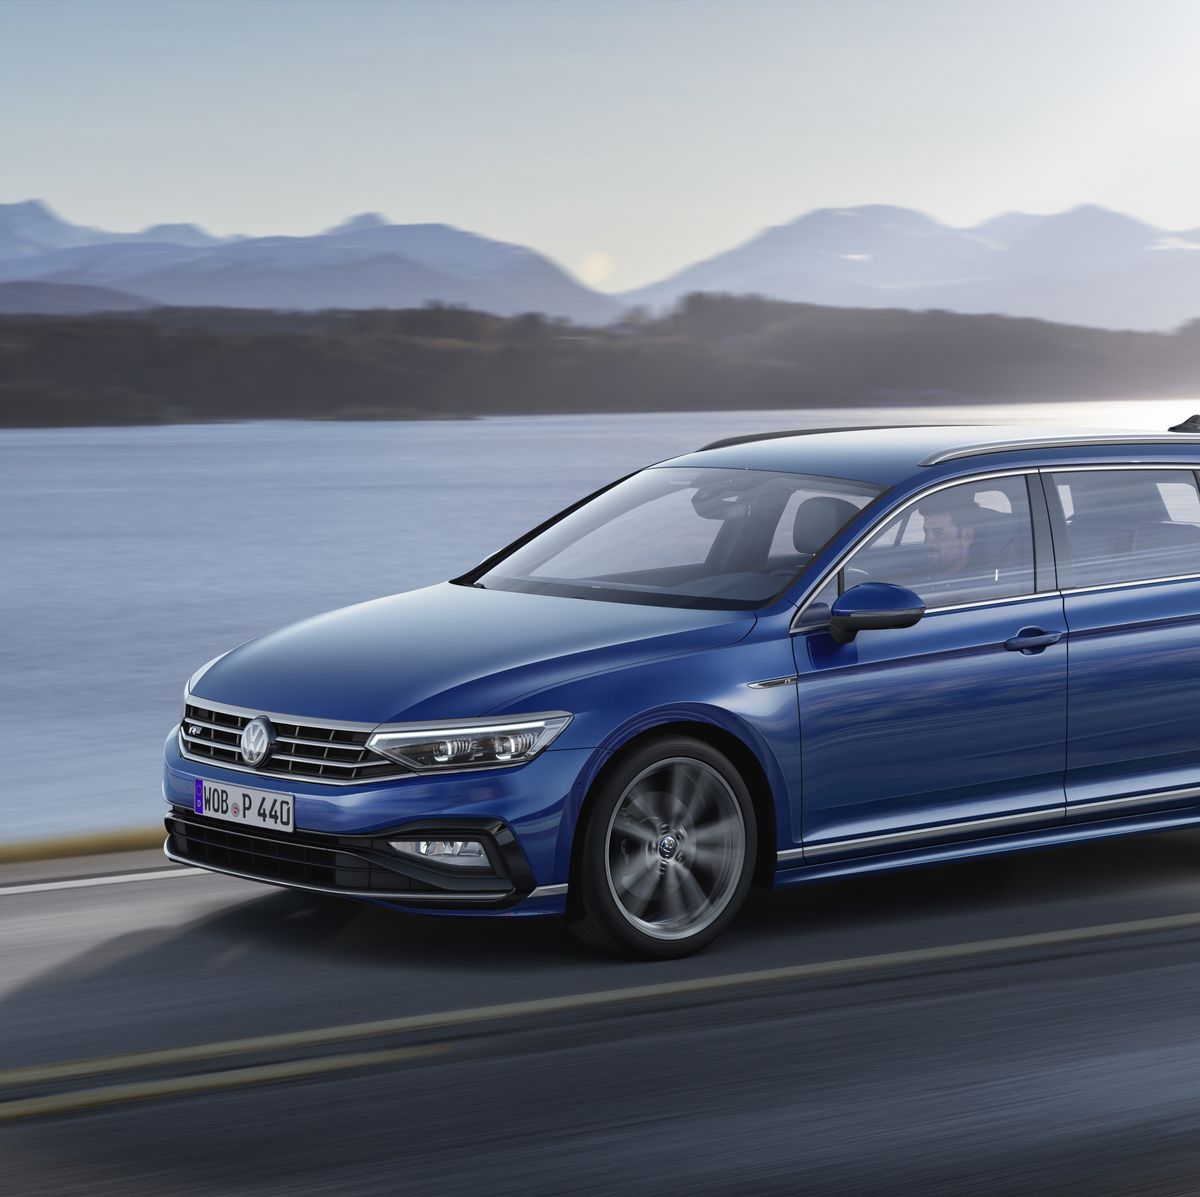 Europe's New Volkswagen Passat Is Still Way Cooler Than America's